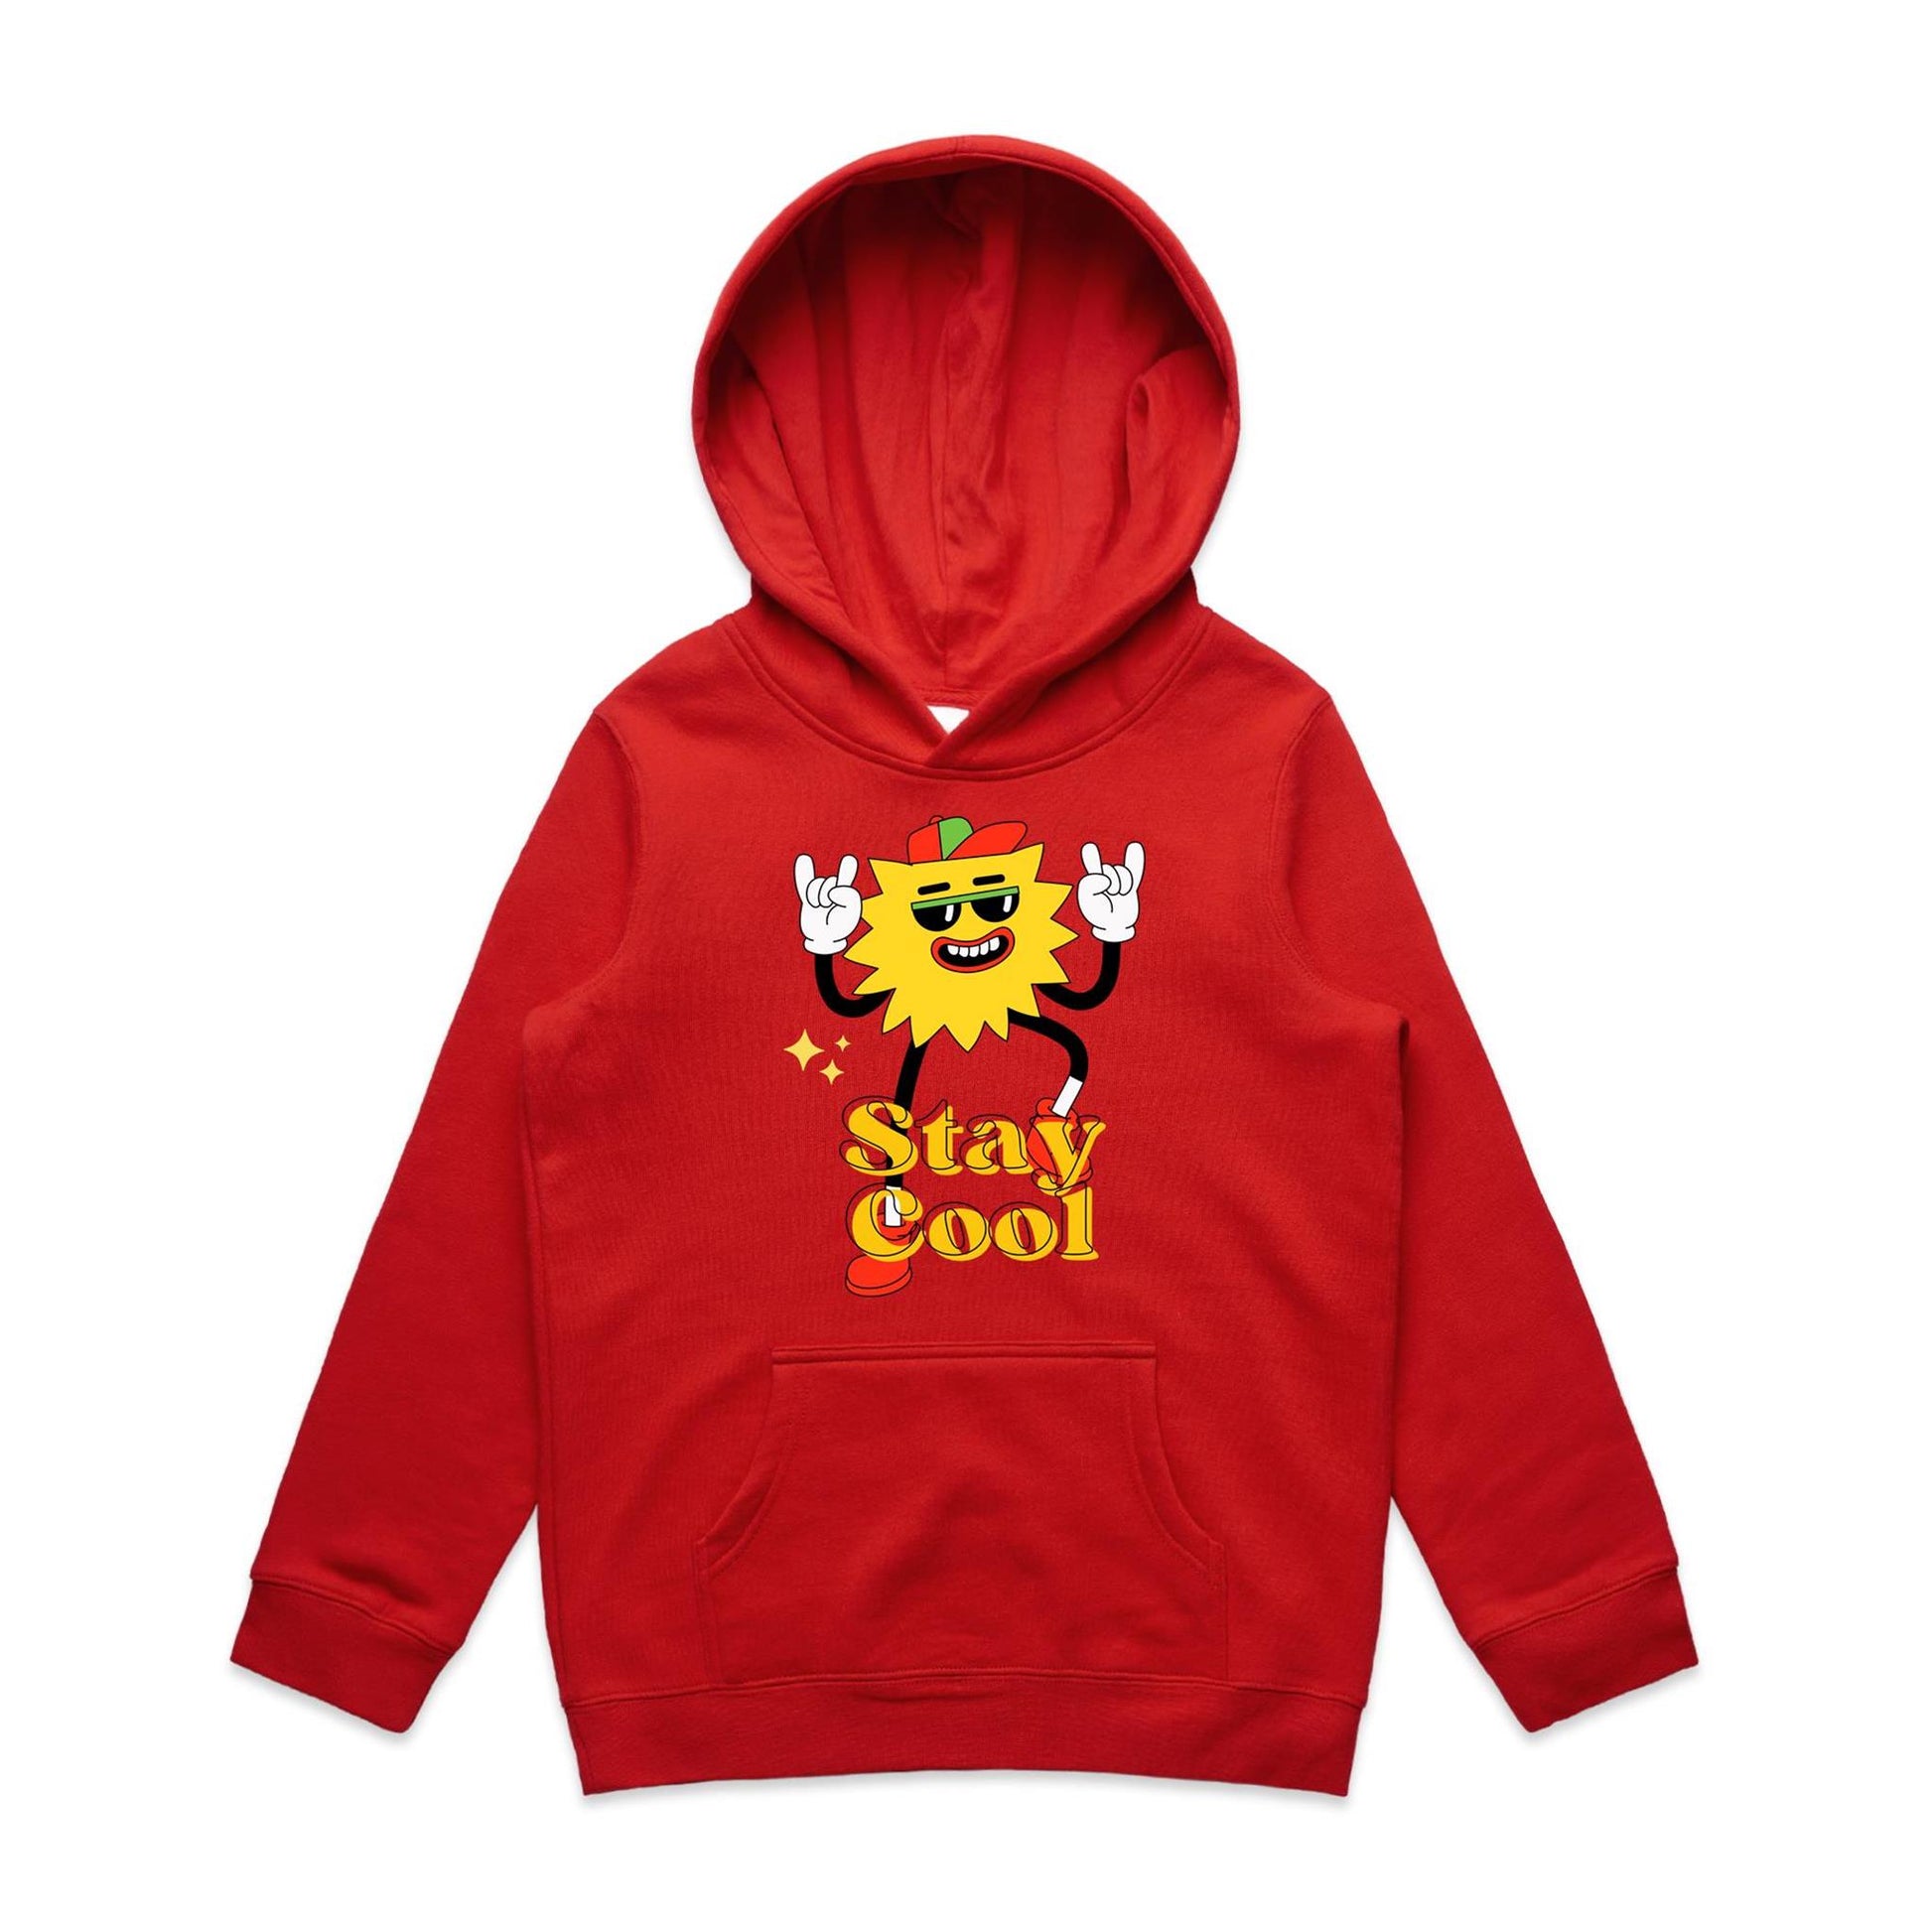 Stay Cool - Youth Supply Hood Red Kids Hoodie